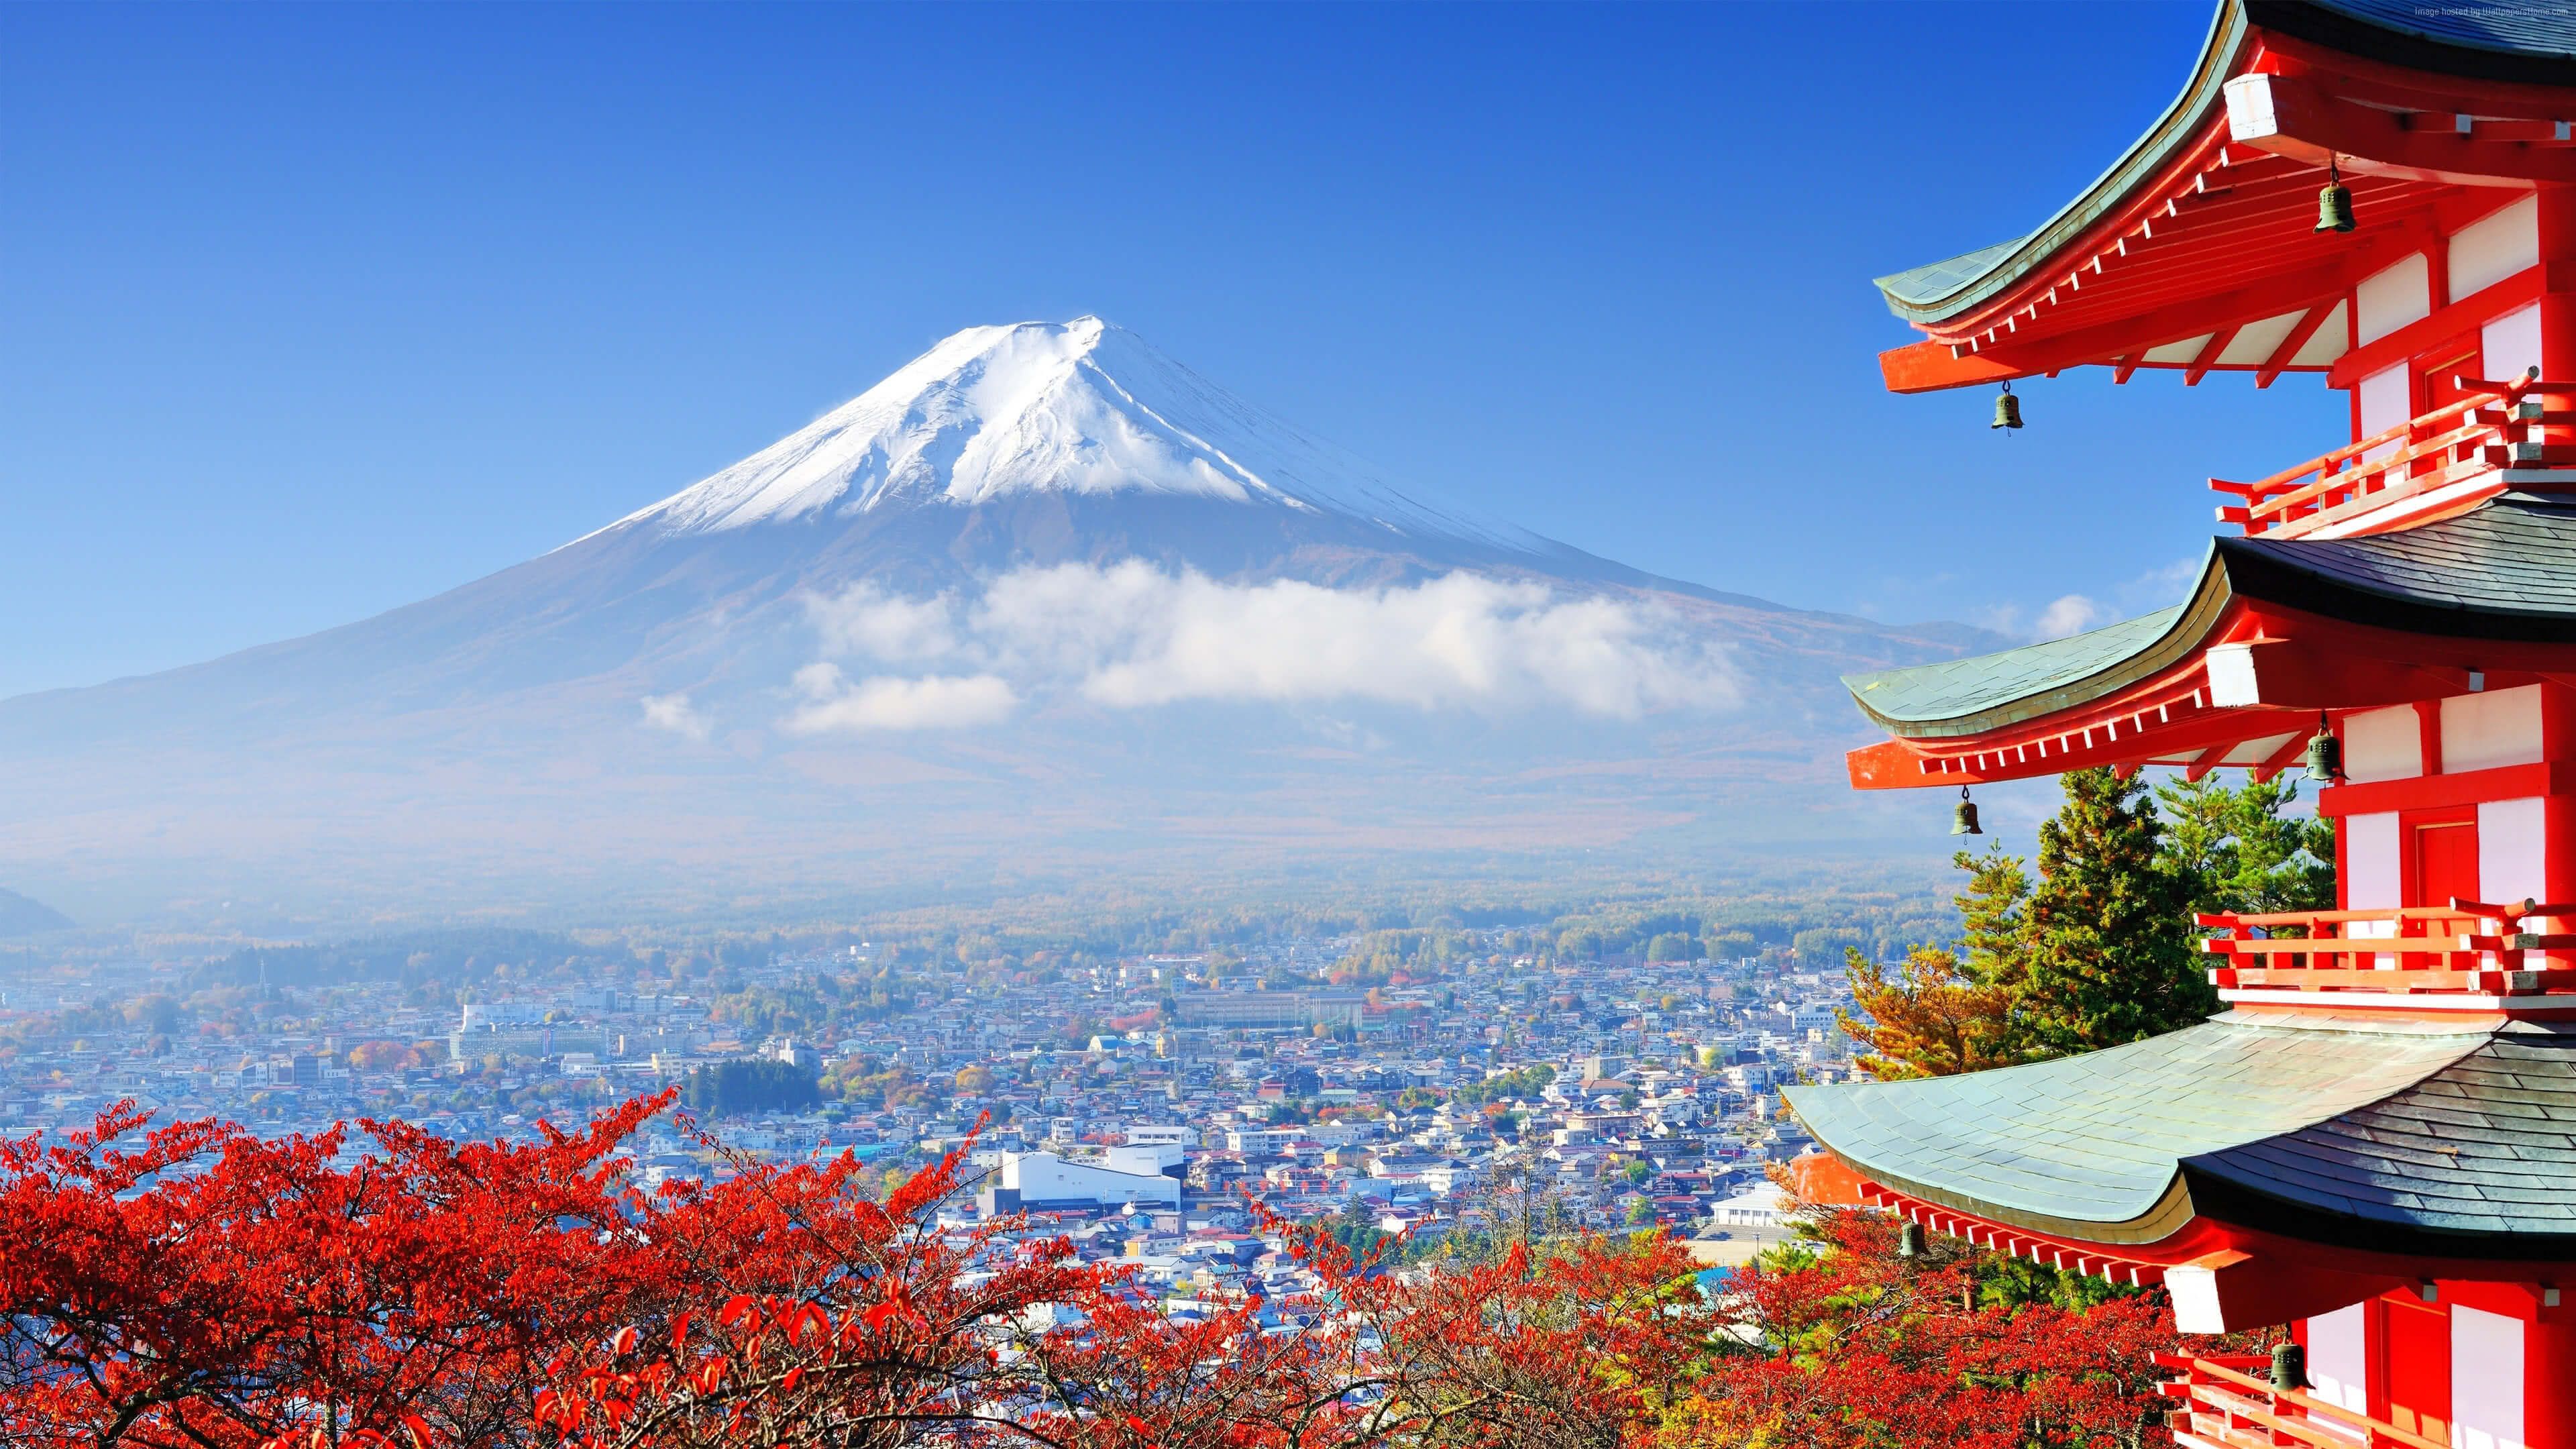 View Of Mount Fuji From A Red Pagoda, Tokyo UHD 4K Wallpaper. Japan tourist, Mount fuji japan, Japan travel